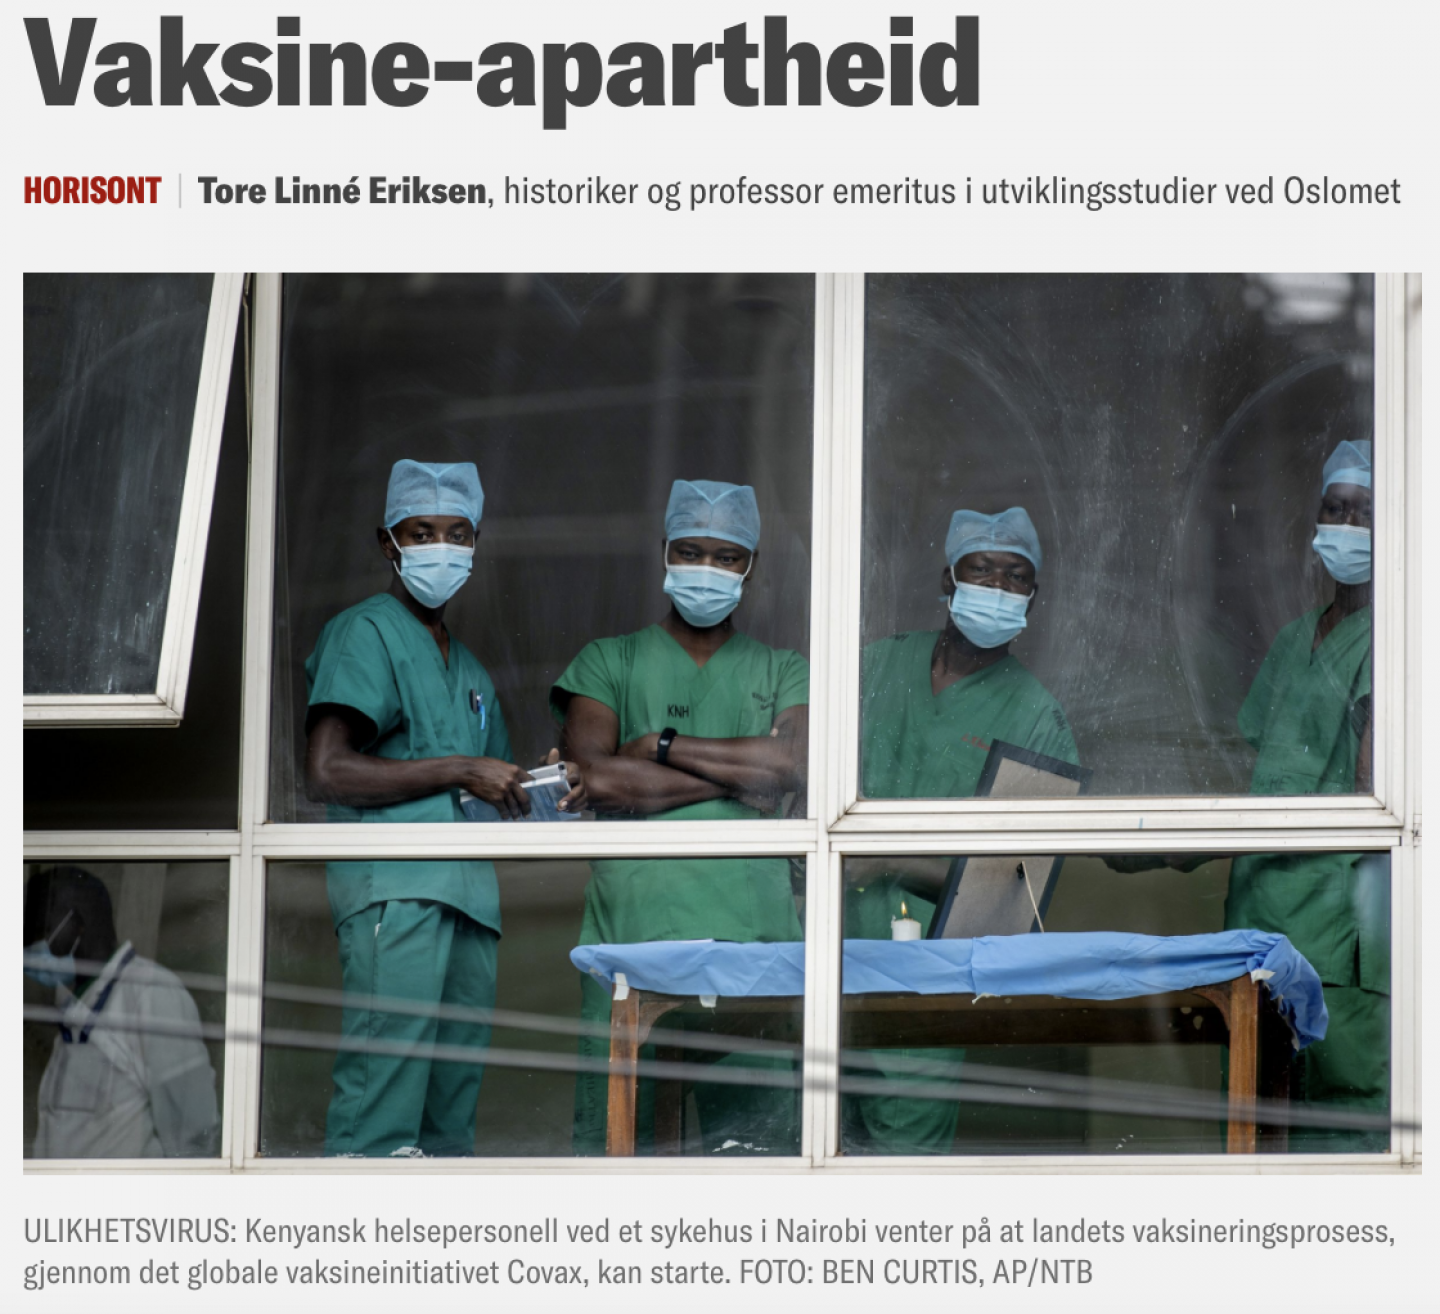 Kronikk i Klassekampen om «vaksine-apartheid»